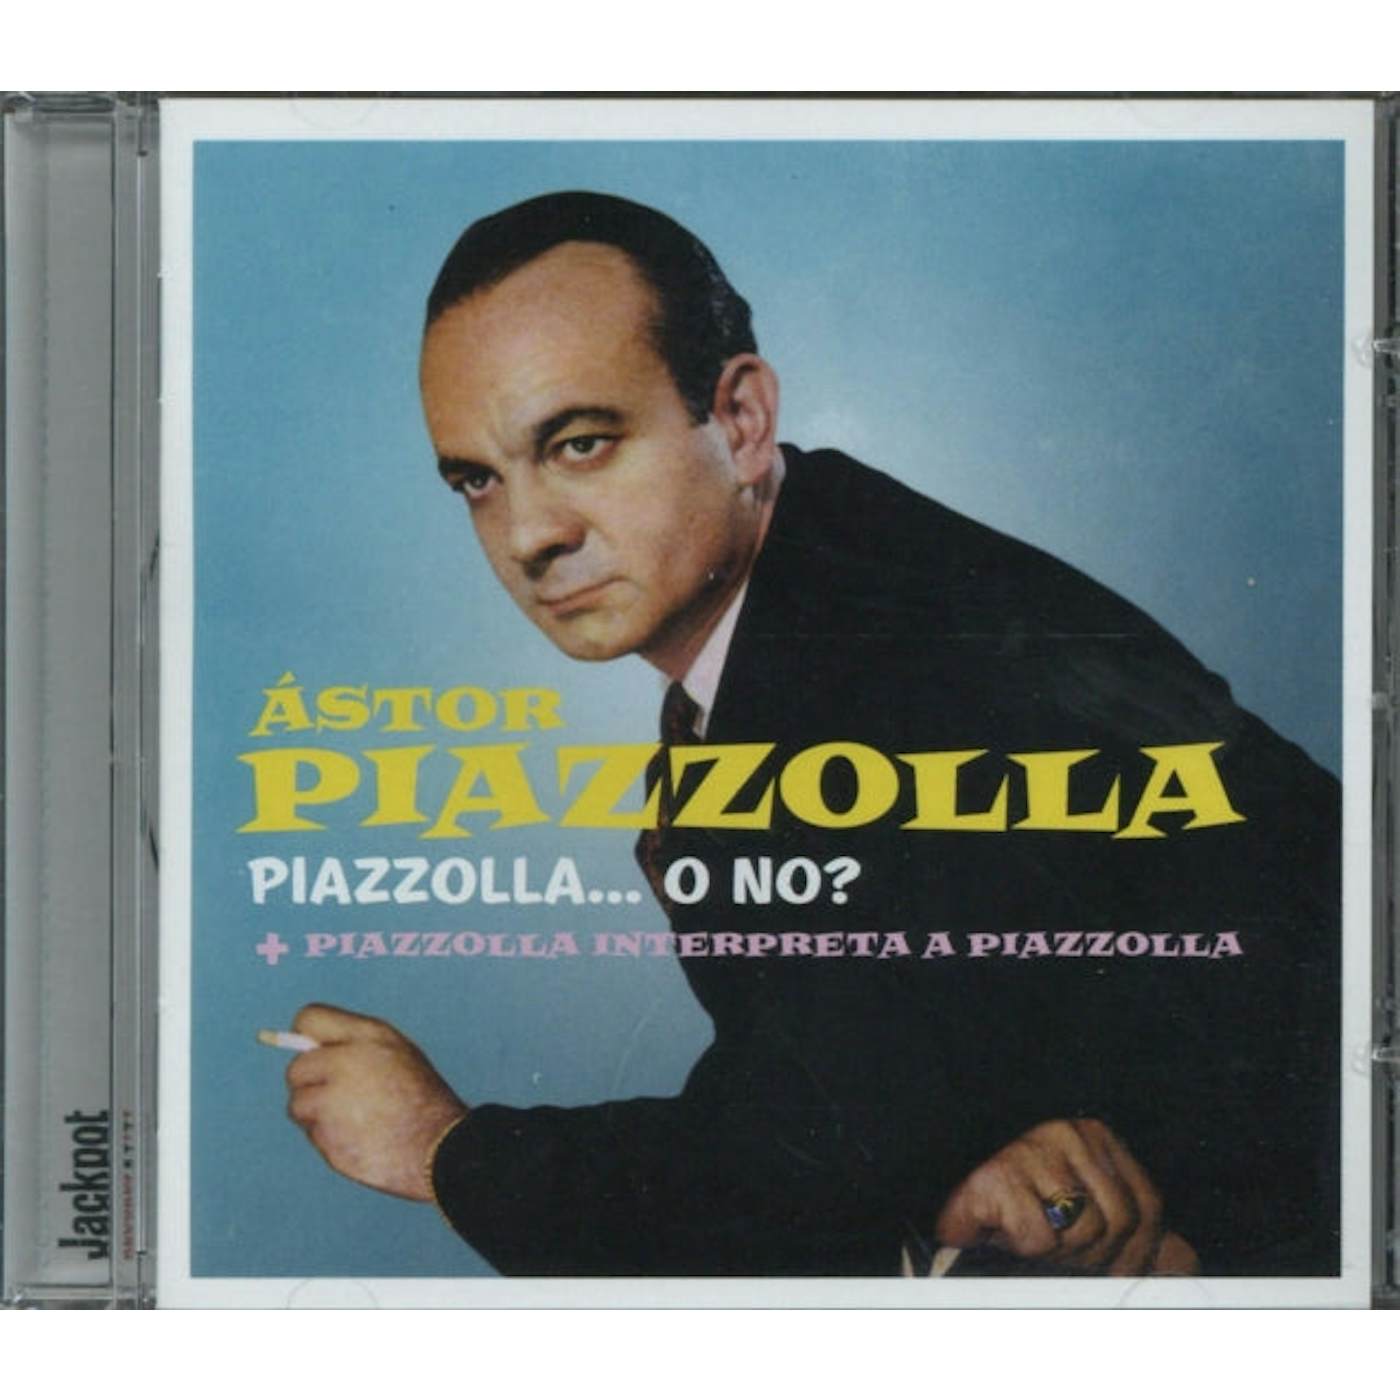 Astor Piazzolla CD - Piazzolla...O No? / Piazzolla Interpreta A Piazzolla